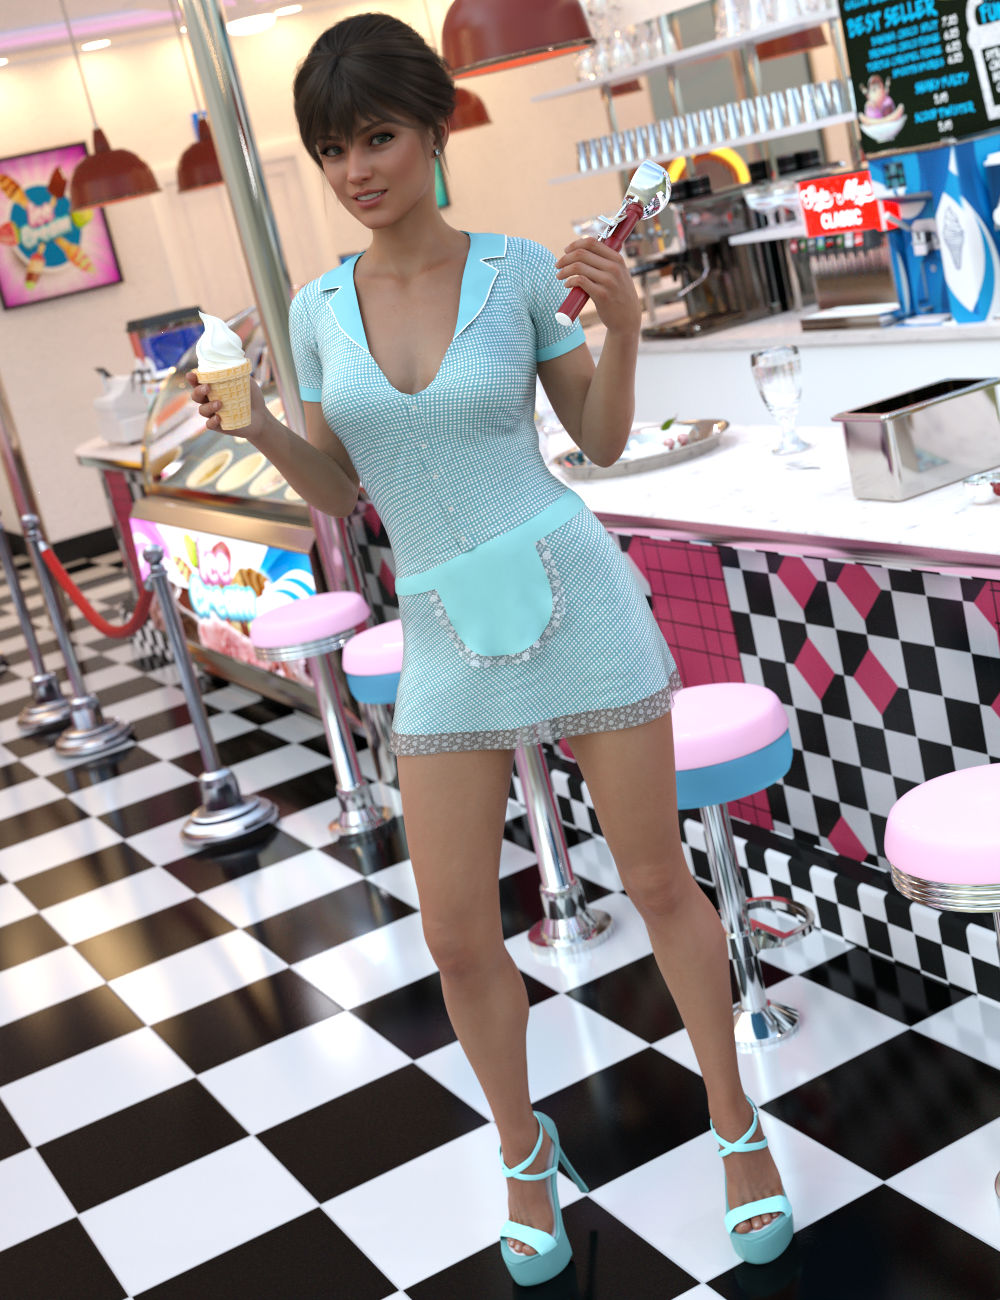 FG Waitress Outfit by: Fugazi1968Ironman, 3D Models by Daz 3D